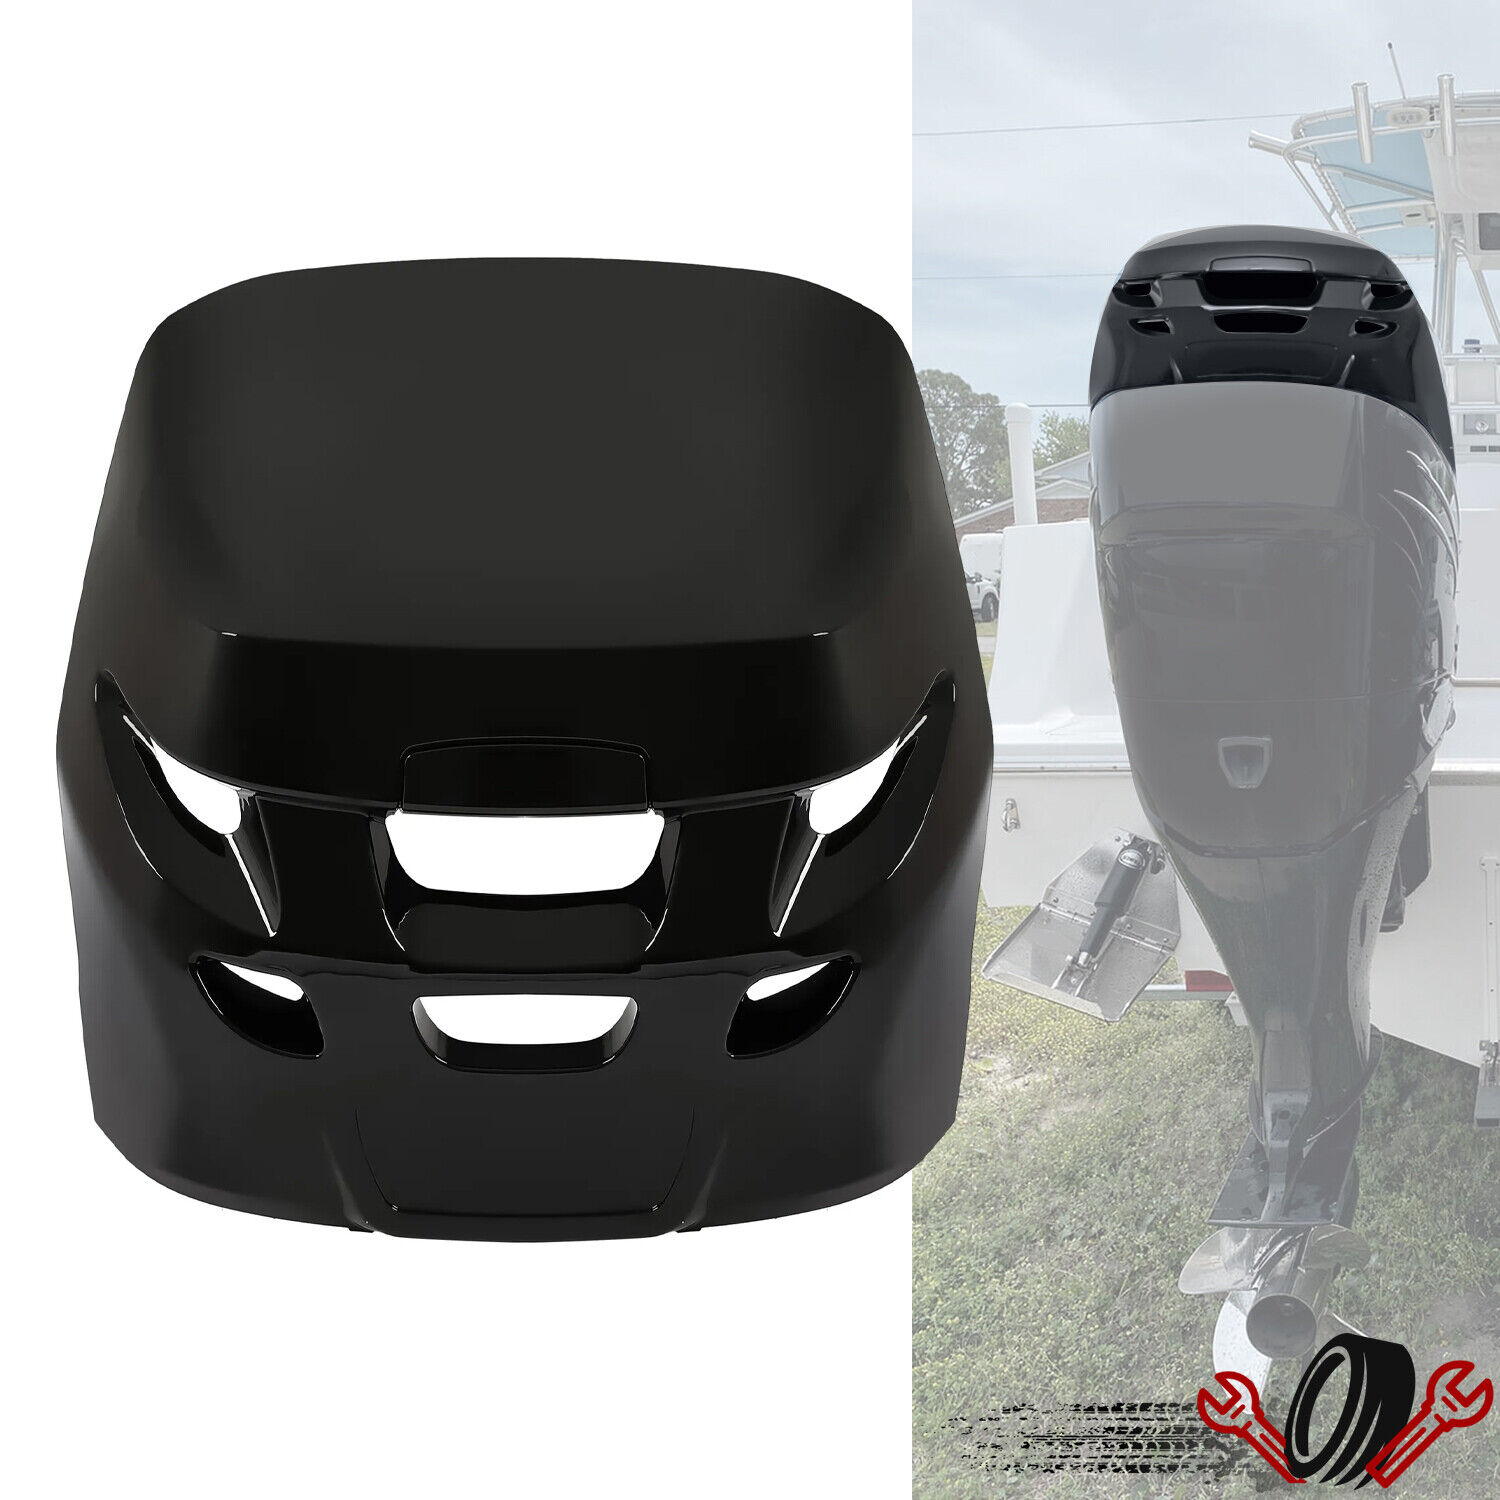 Black ABS Top Cowling Airdam Cap For Verado #885354T01 Engine Cover